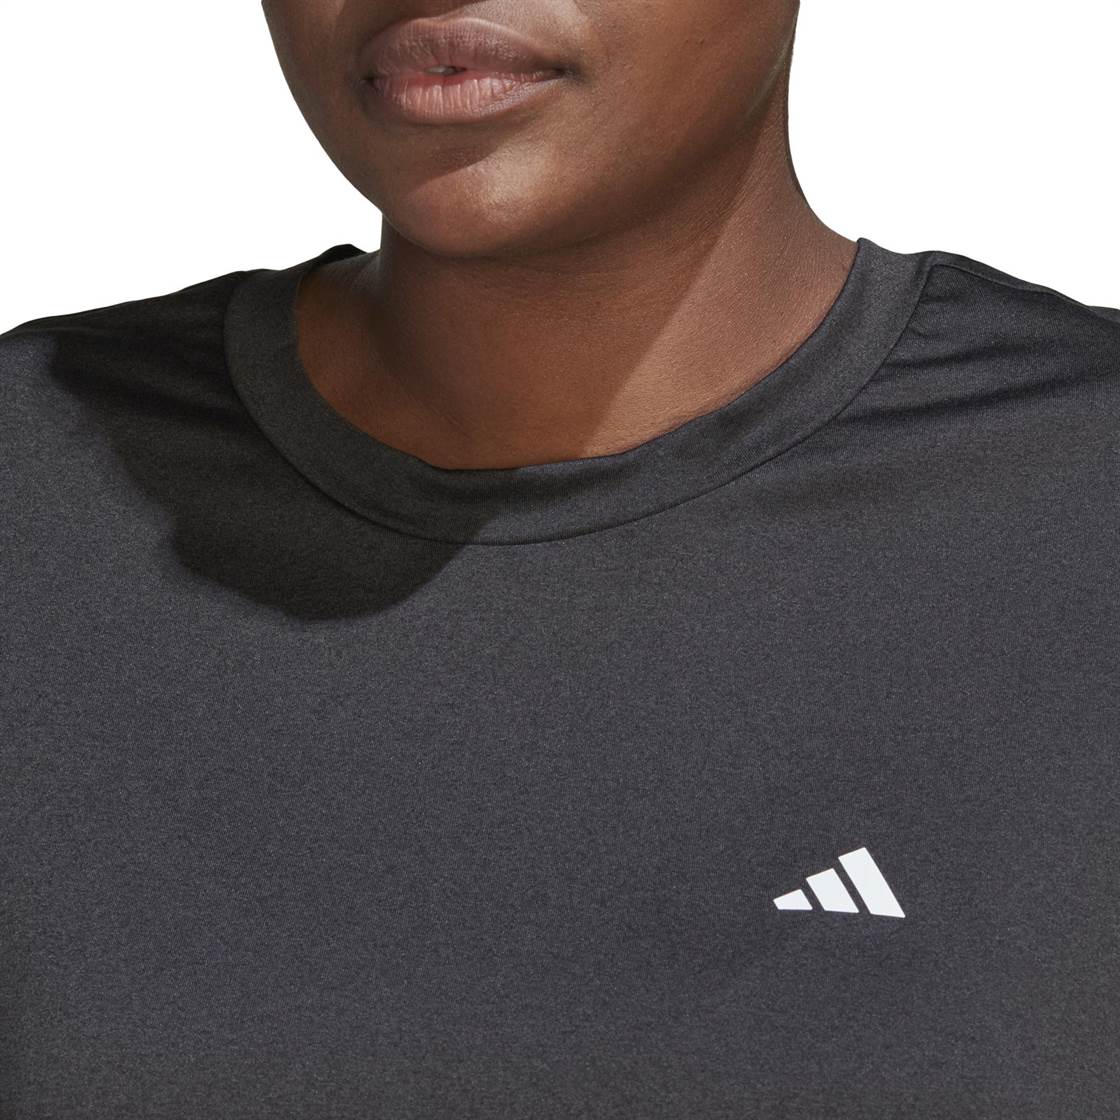 adidas Aeroready Made For Training Minimal Womens T-Shirt (Plus Size)